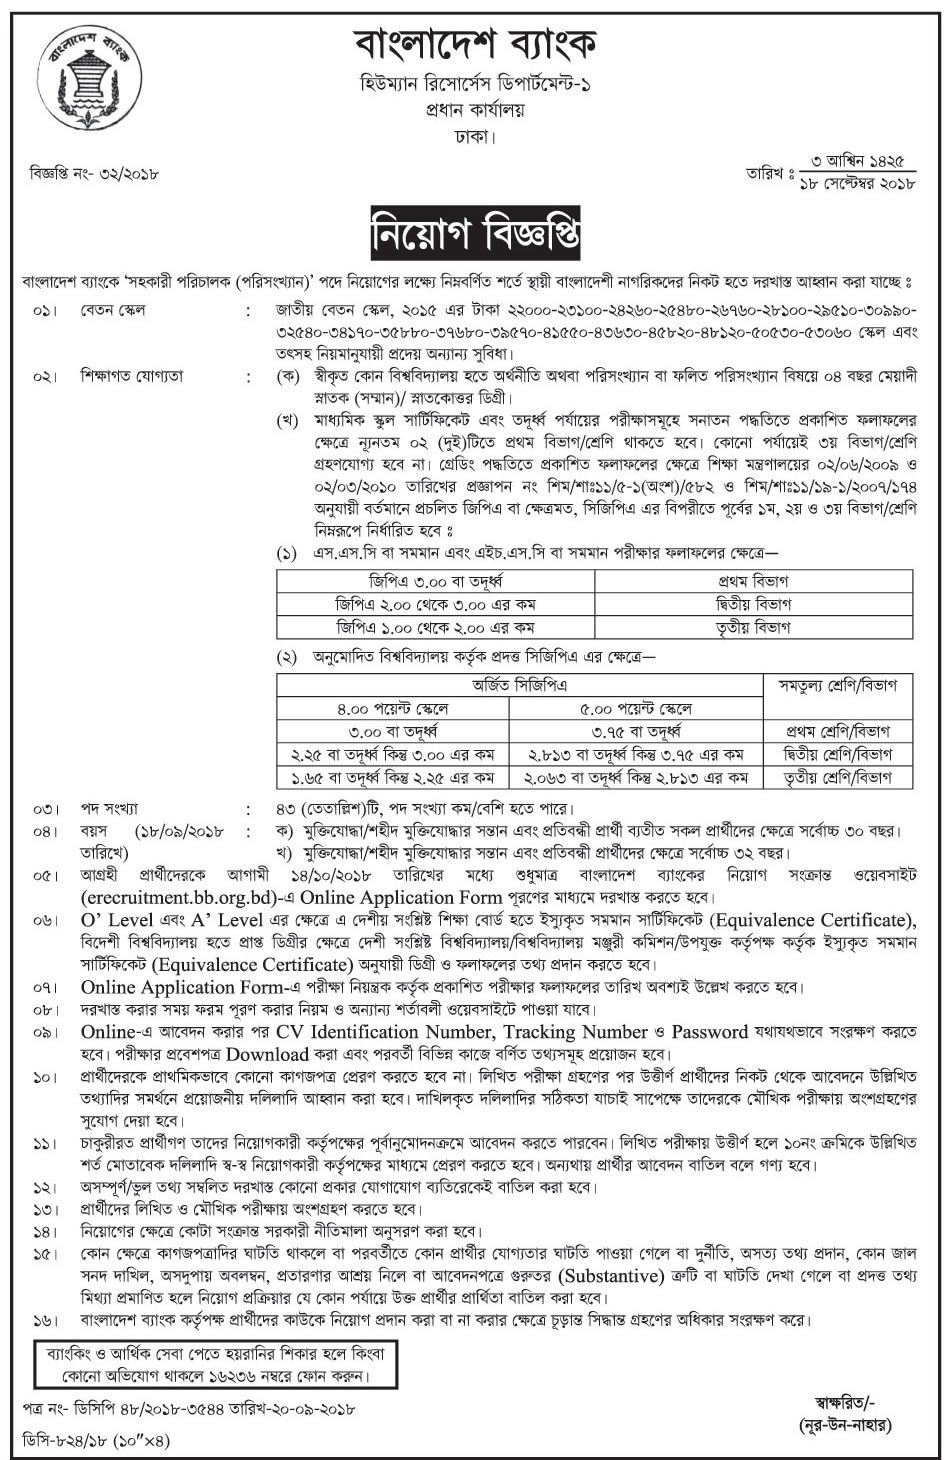 Bangladesh Bank (BB) Assistant Director (Statistics) Job Circular 2018